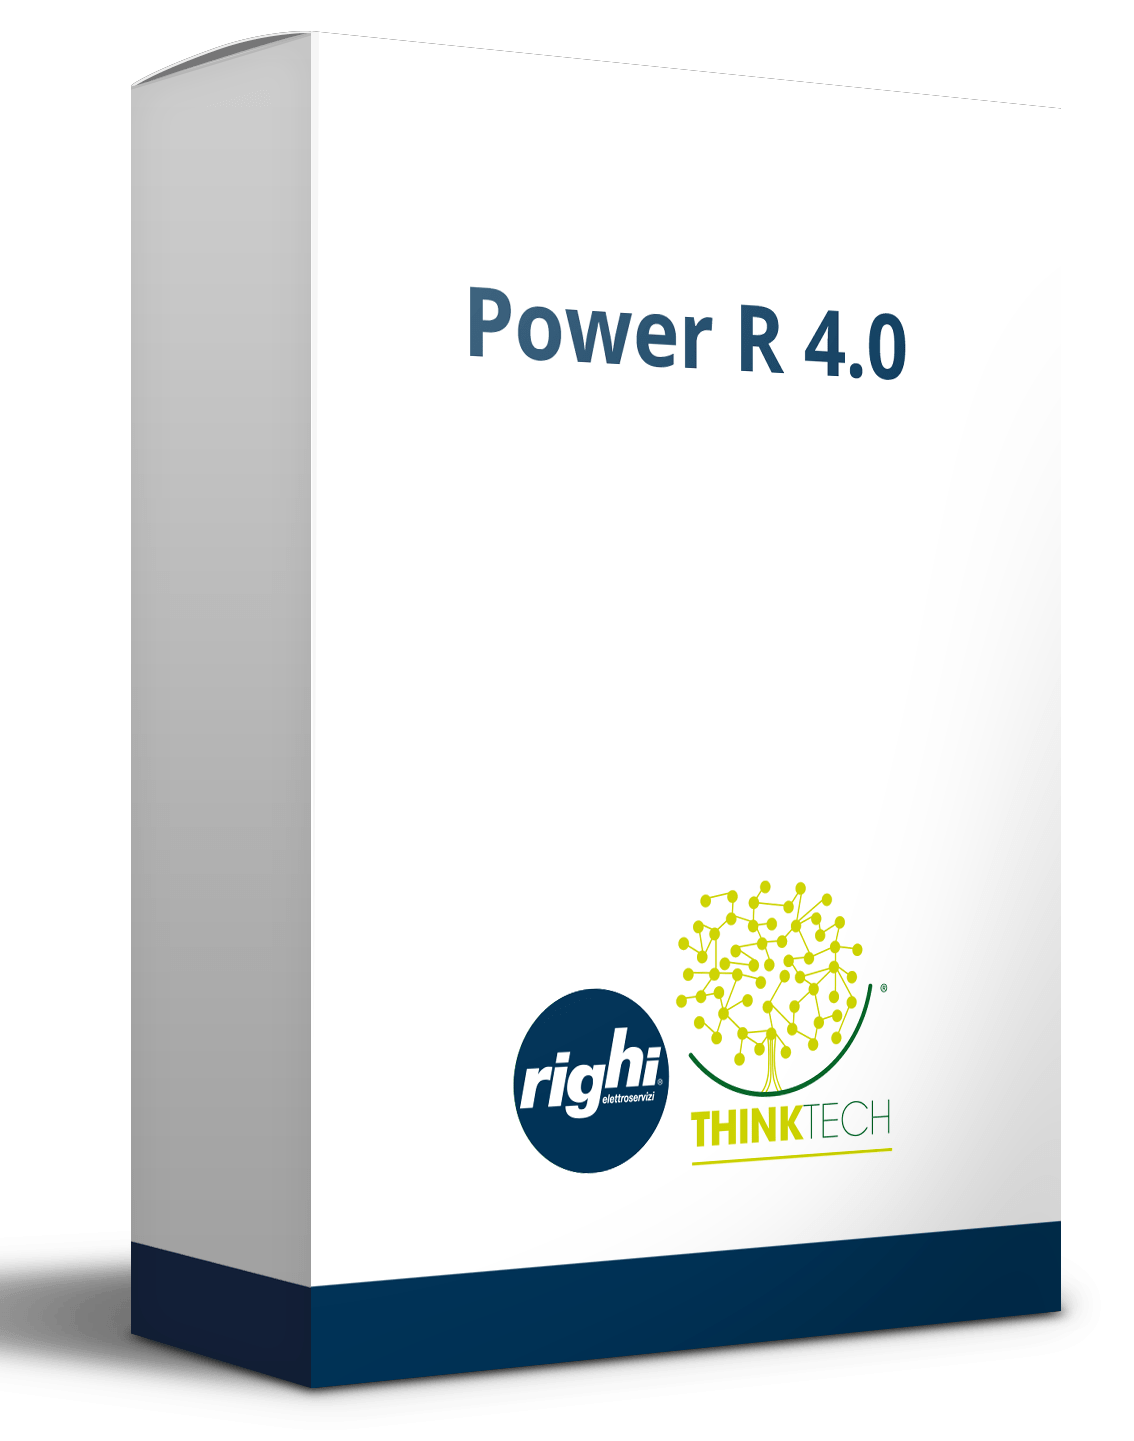 POWER R 4.0 image